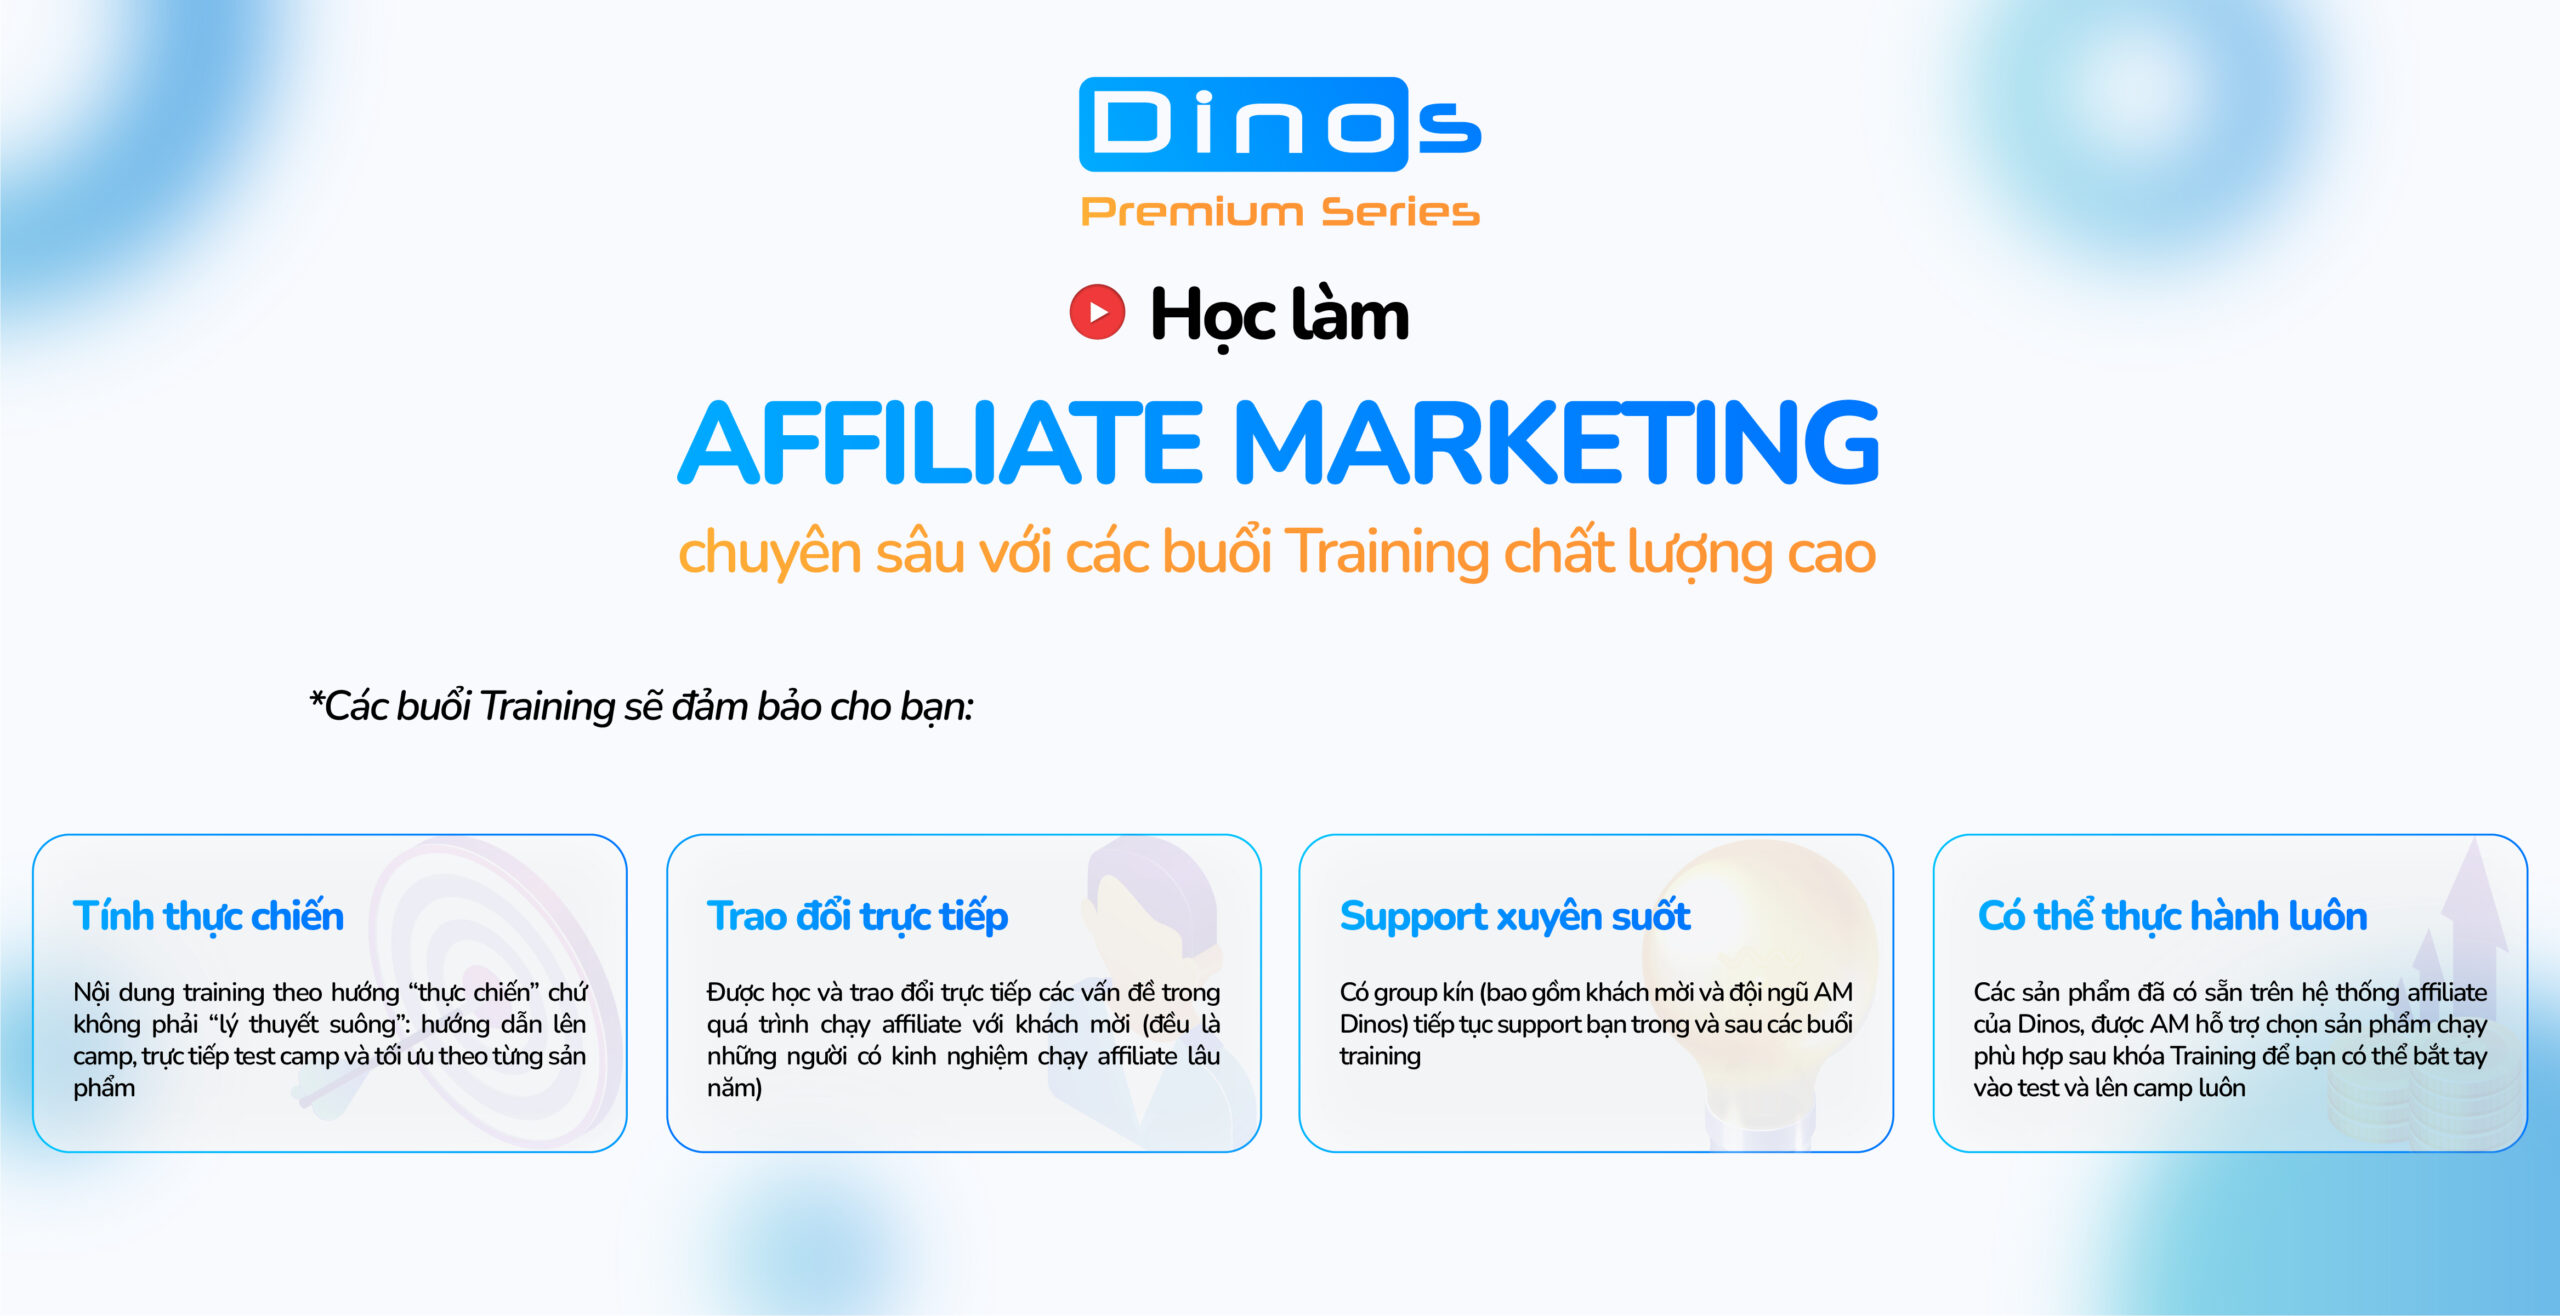 Dinos Premium Series – Học làm Affiliate Marketing chuyên sâu